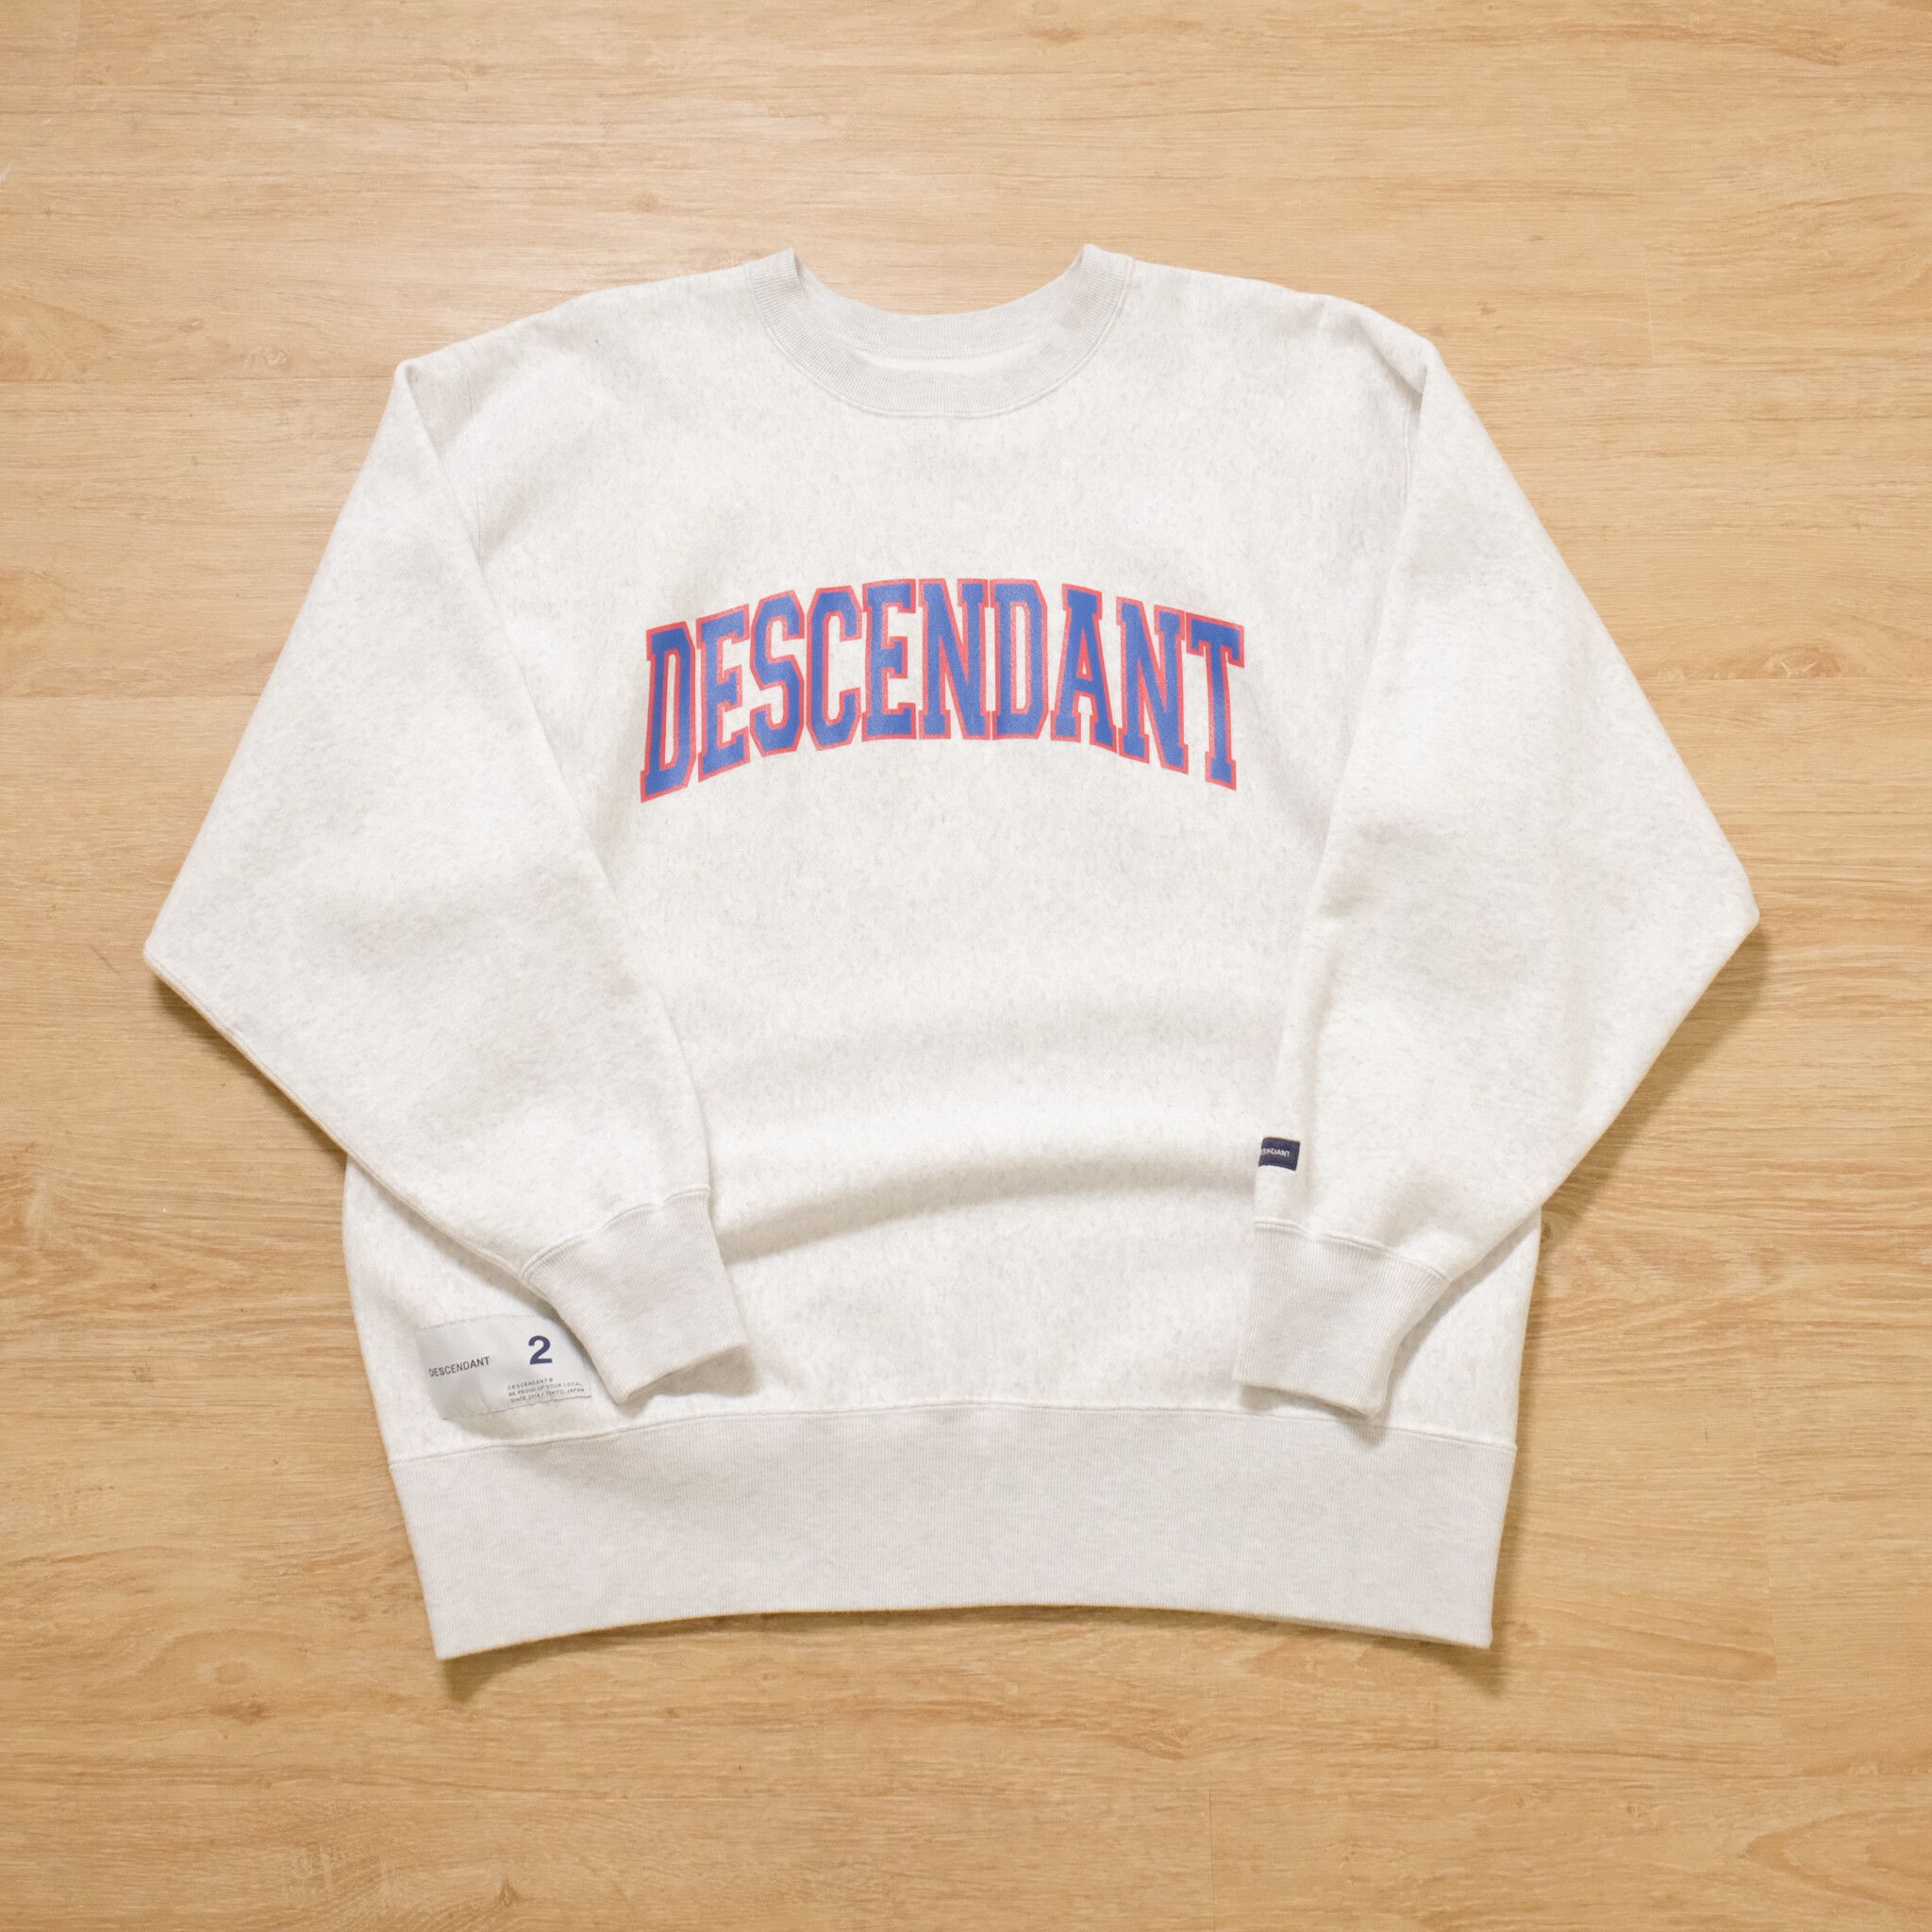 Descendant 【DESCENDANT / TEAM CREW NECK SWEATSHIRT / SIZE 2